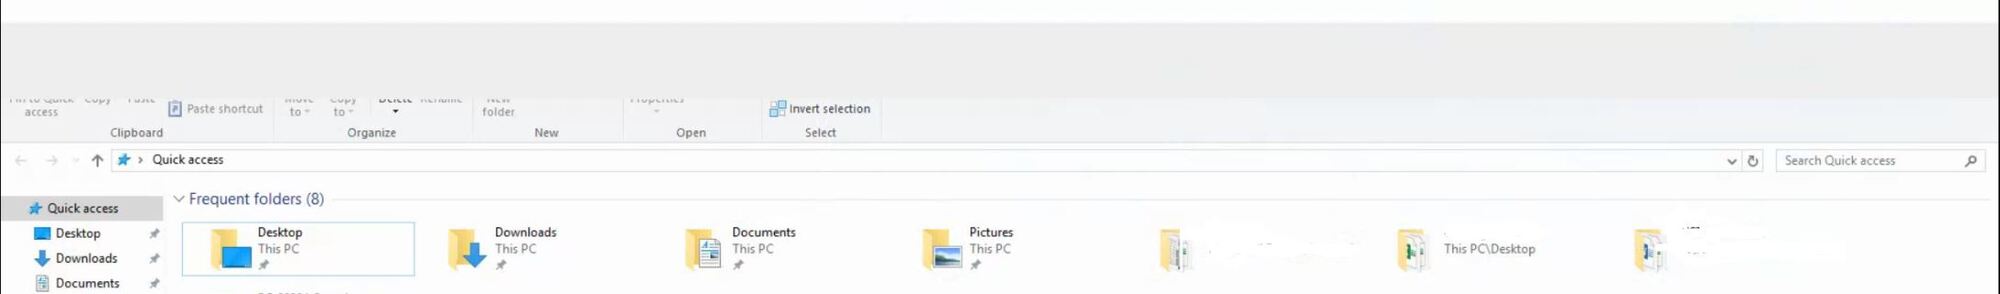 Windows RDS Server 2016 - White bar at top of maximized window Chrome & Explorer are both... 93c652d2-c817-4c5f-91f7-9897d1a57f8f?upload=true.jpg